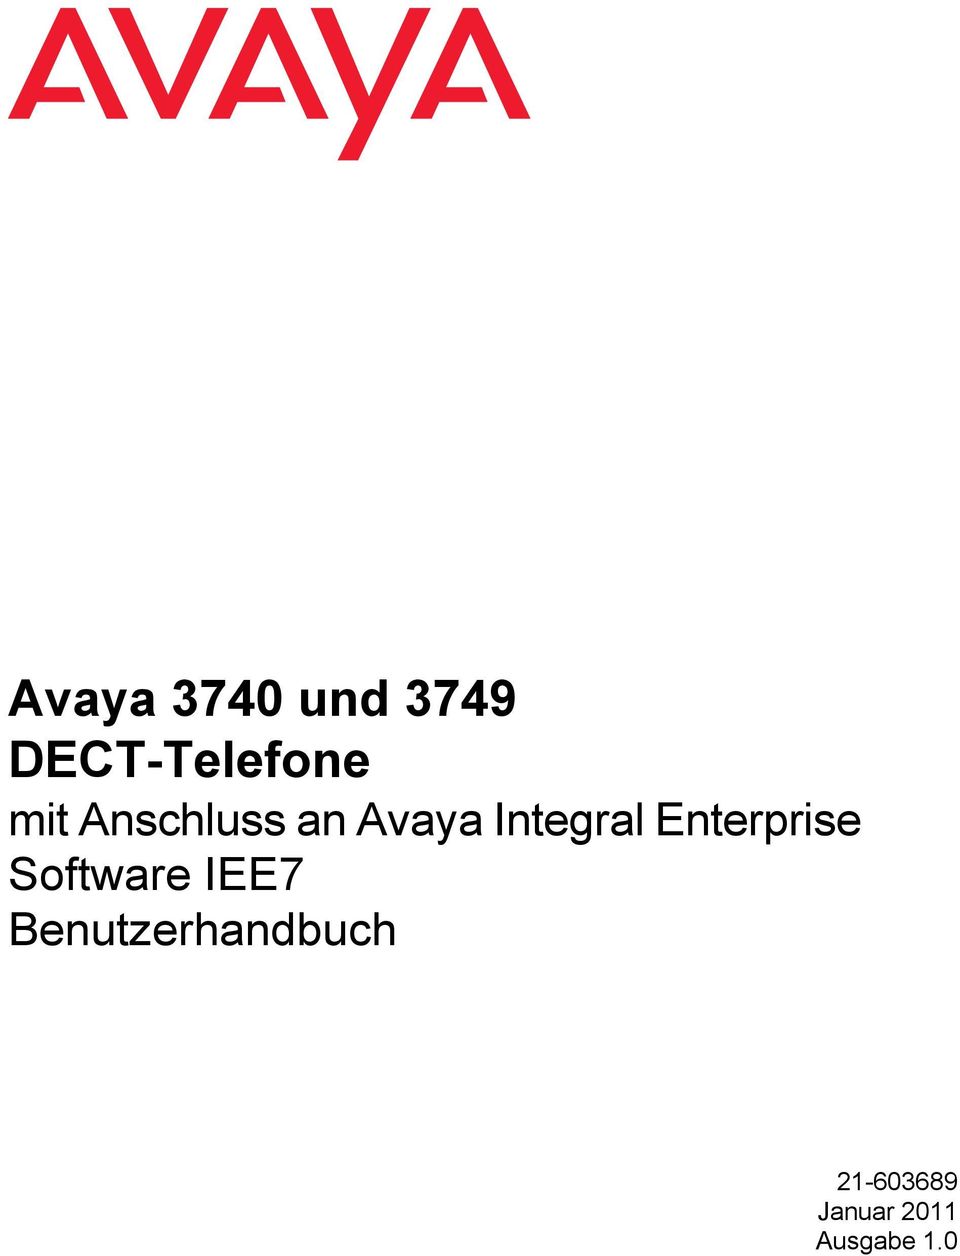 Enterprise Software IEE7